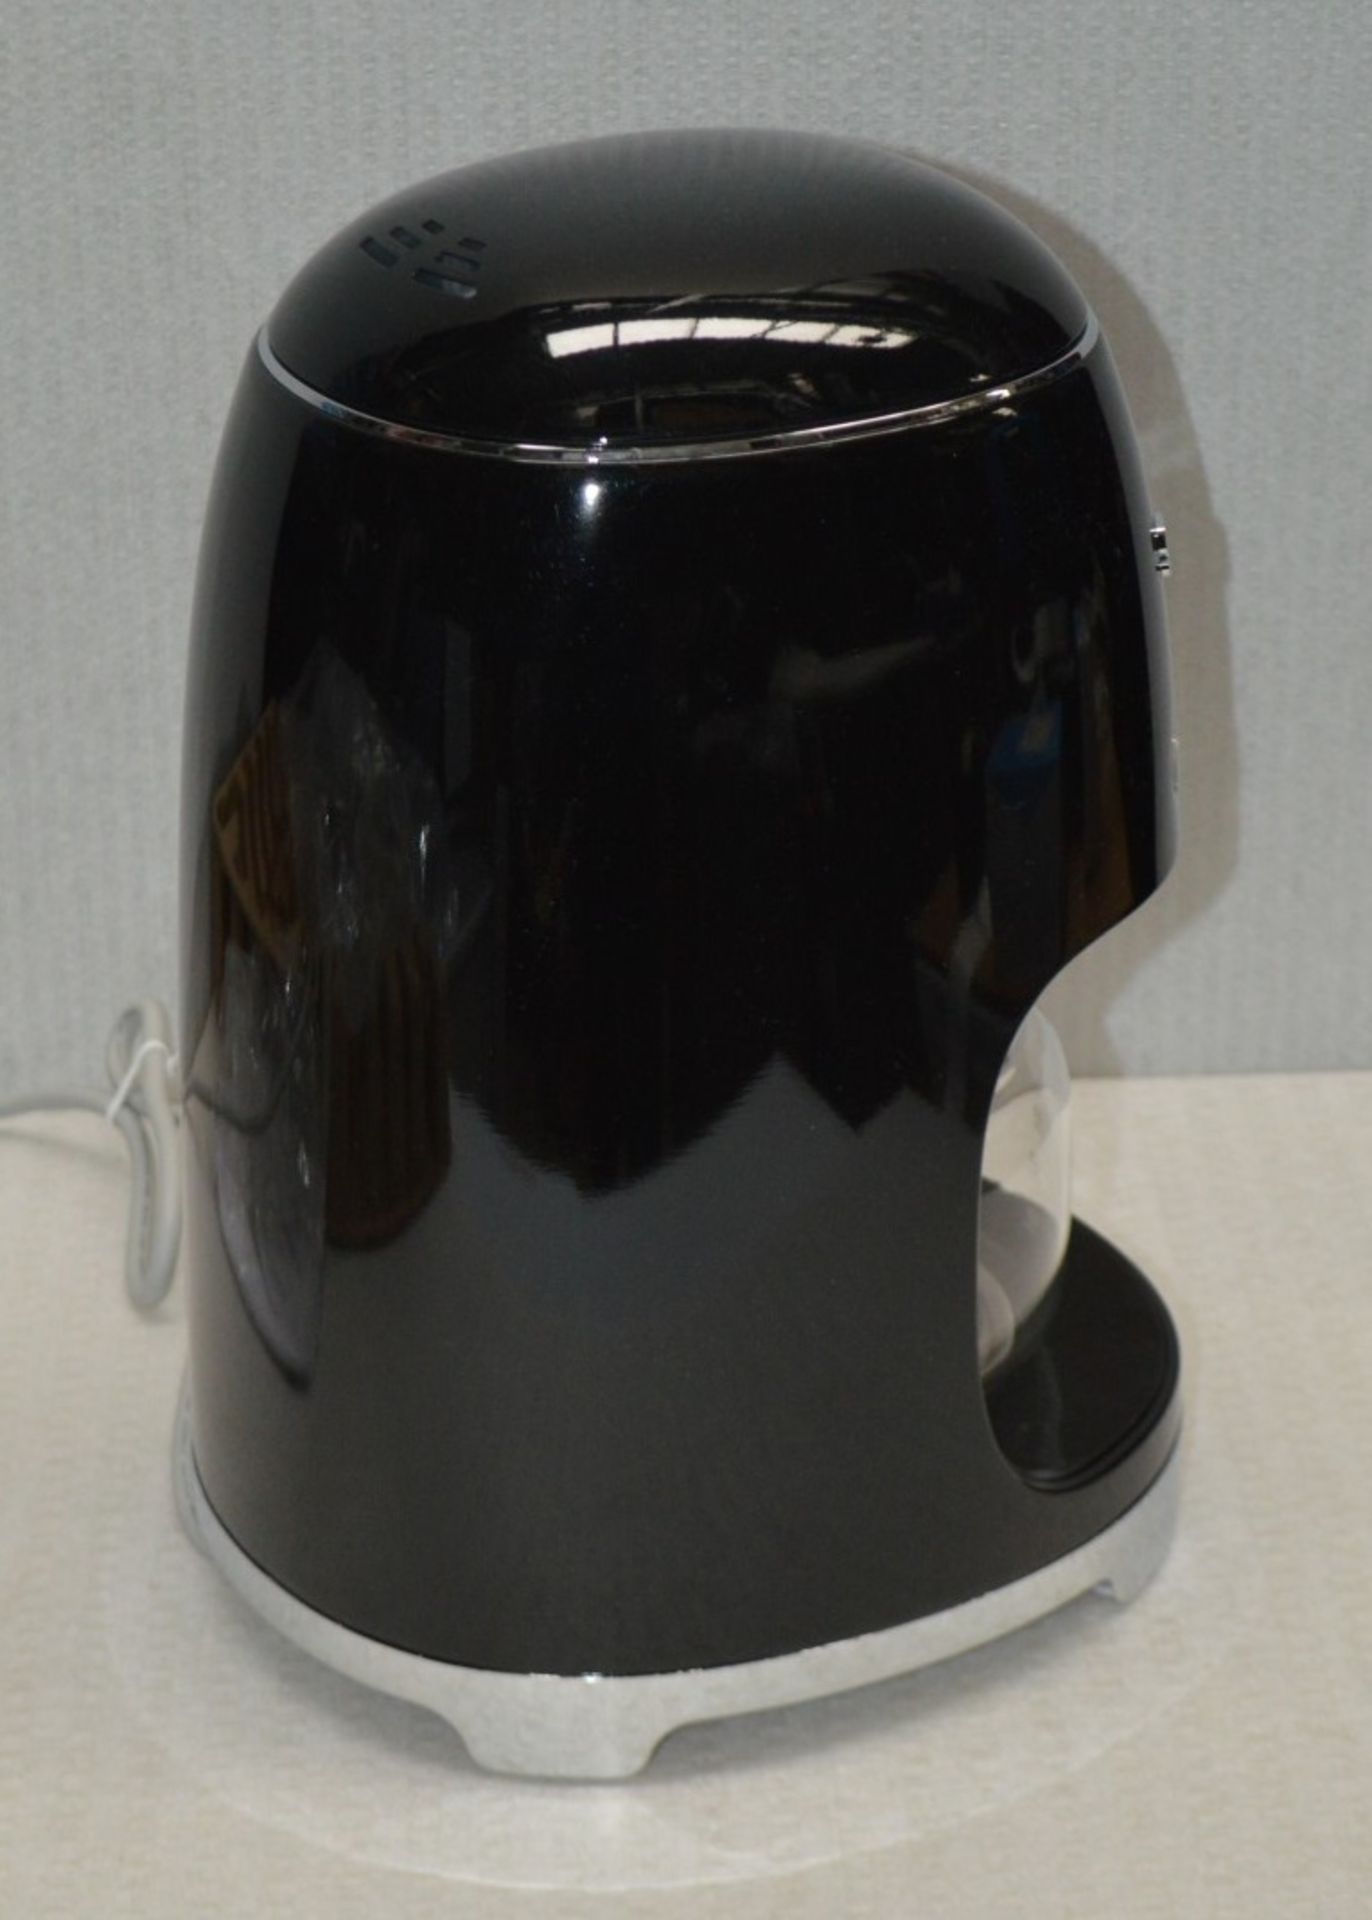 1 x SMEG Drip Coffee Machine In Black - Ref: HHW64/JUL21 - PAL/A - CL679 - Location: Altrincham WA14 - Image 8 of 10